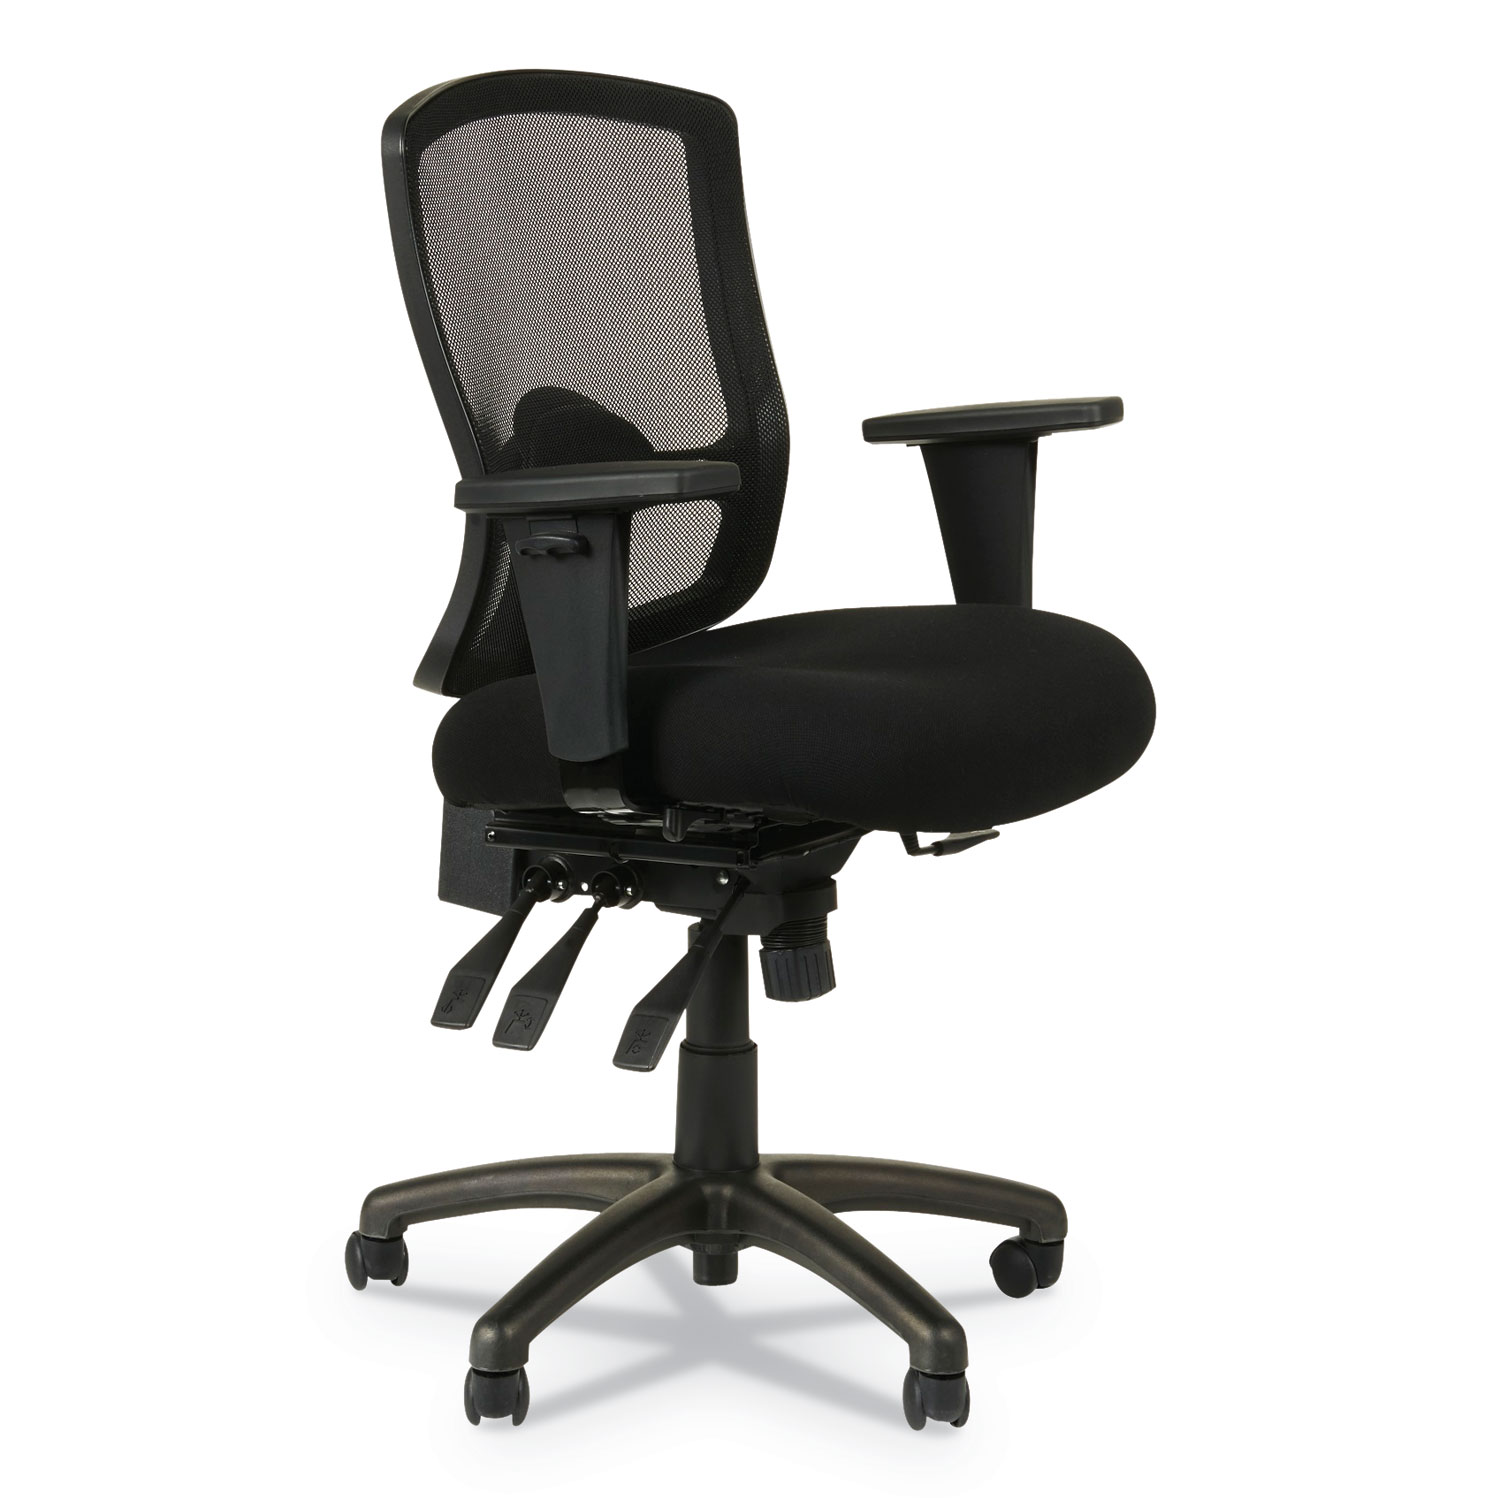  Alera ALEET4017 Alera Etros Series Mesh Mid-Back Petite Multifunction Chair, Supports up to 275 lbs., Black Seat/Black Back, Black Base (ALEET4017) 